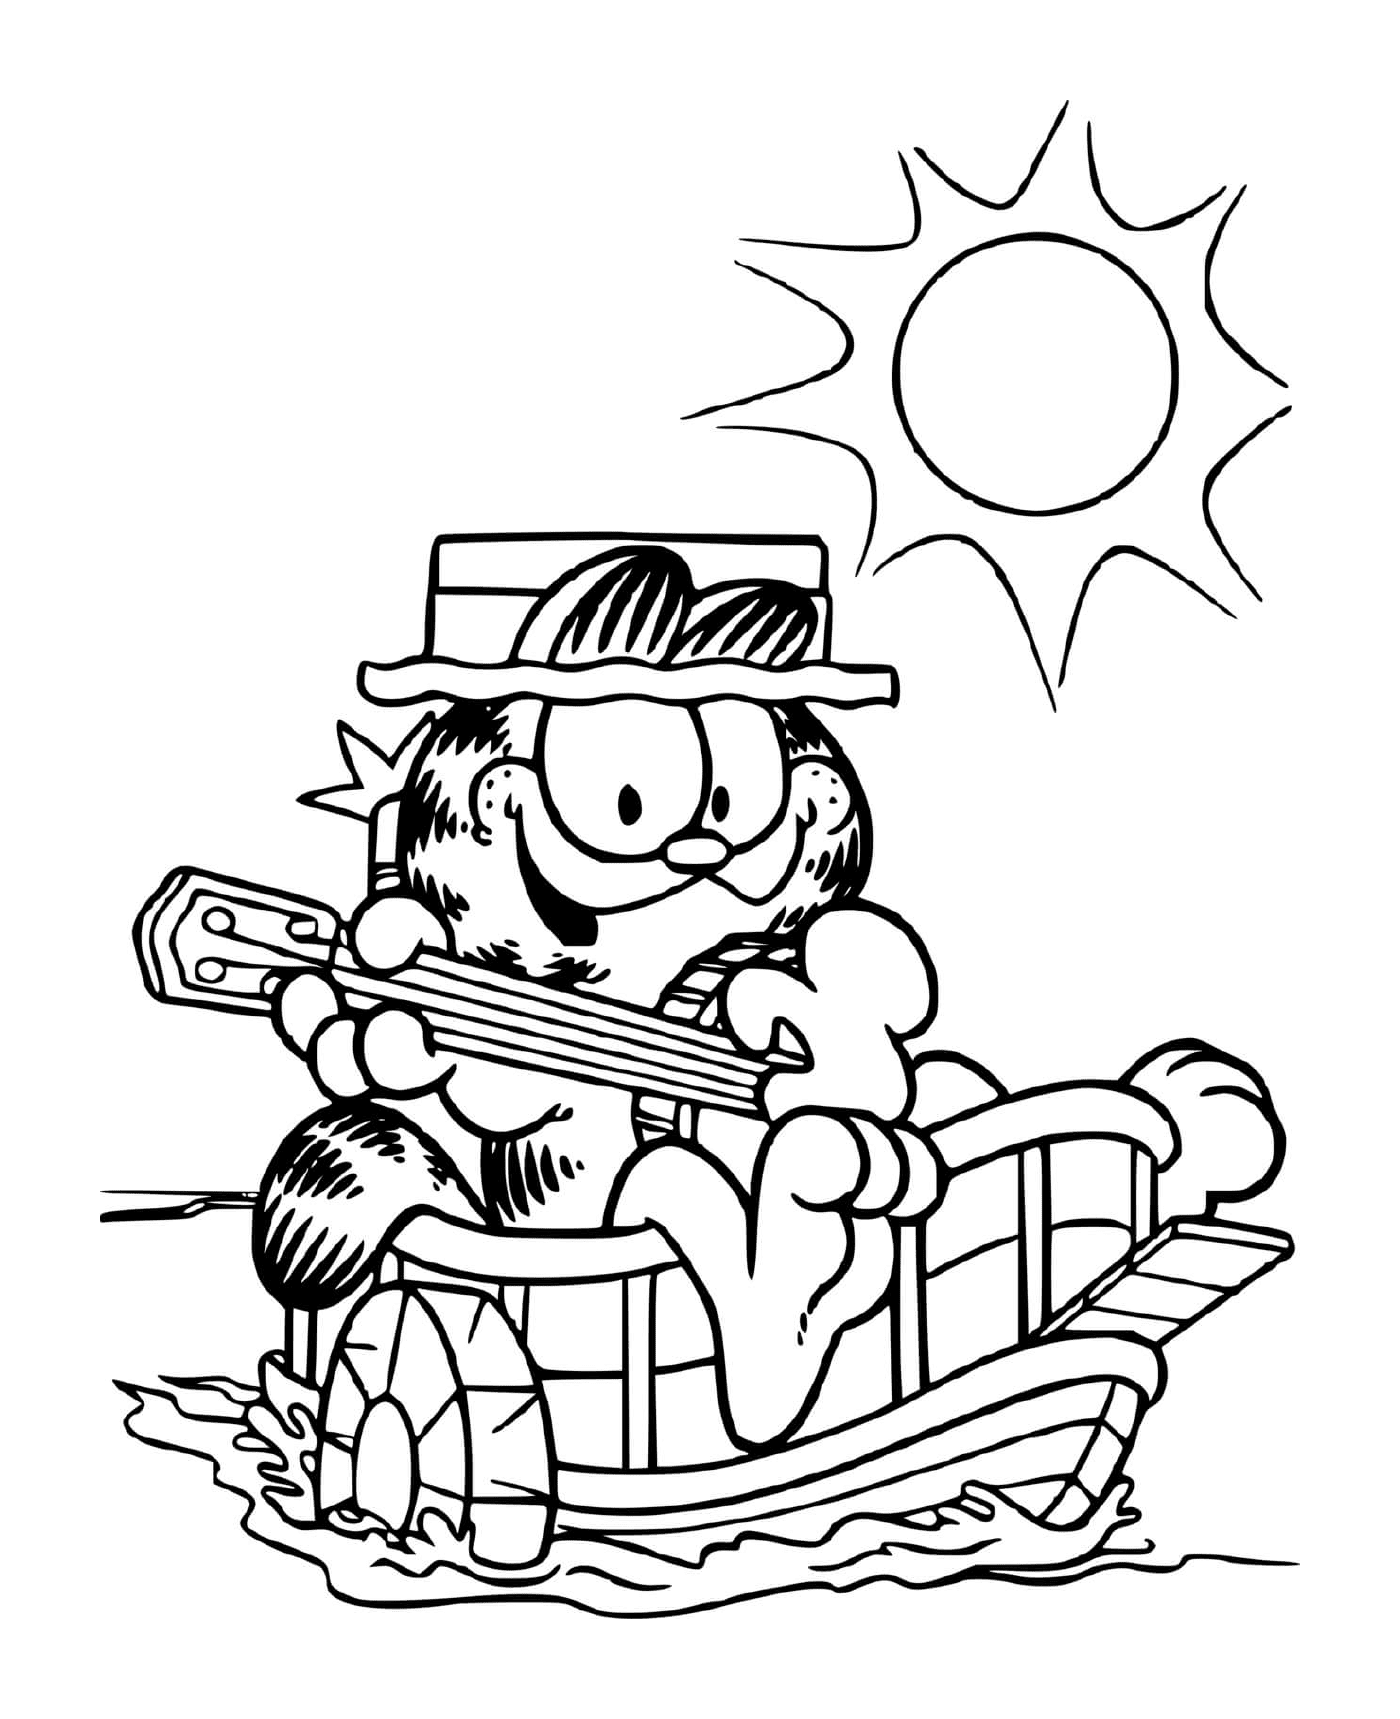  Гарфилд играет на гитаре на своей лодке 